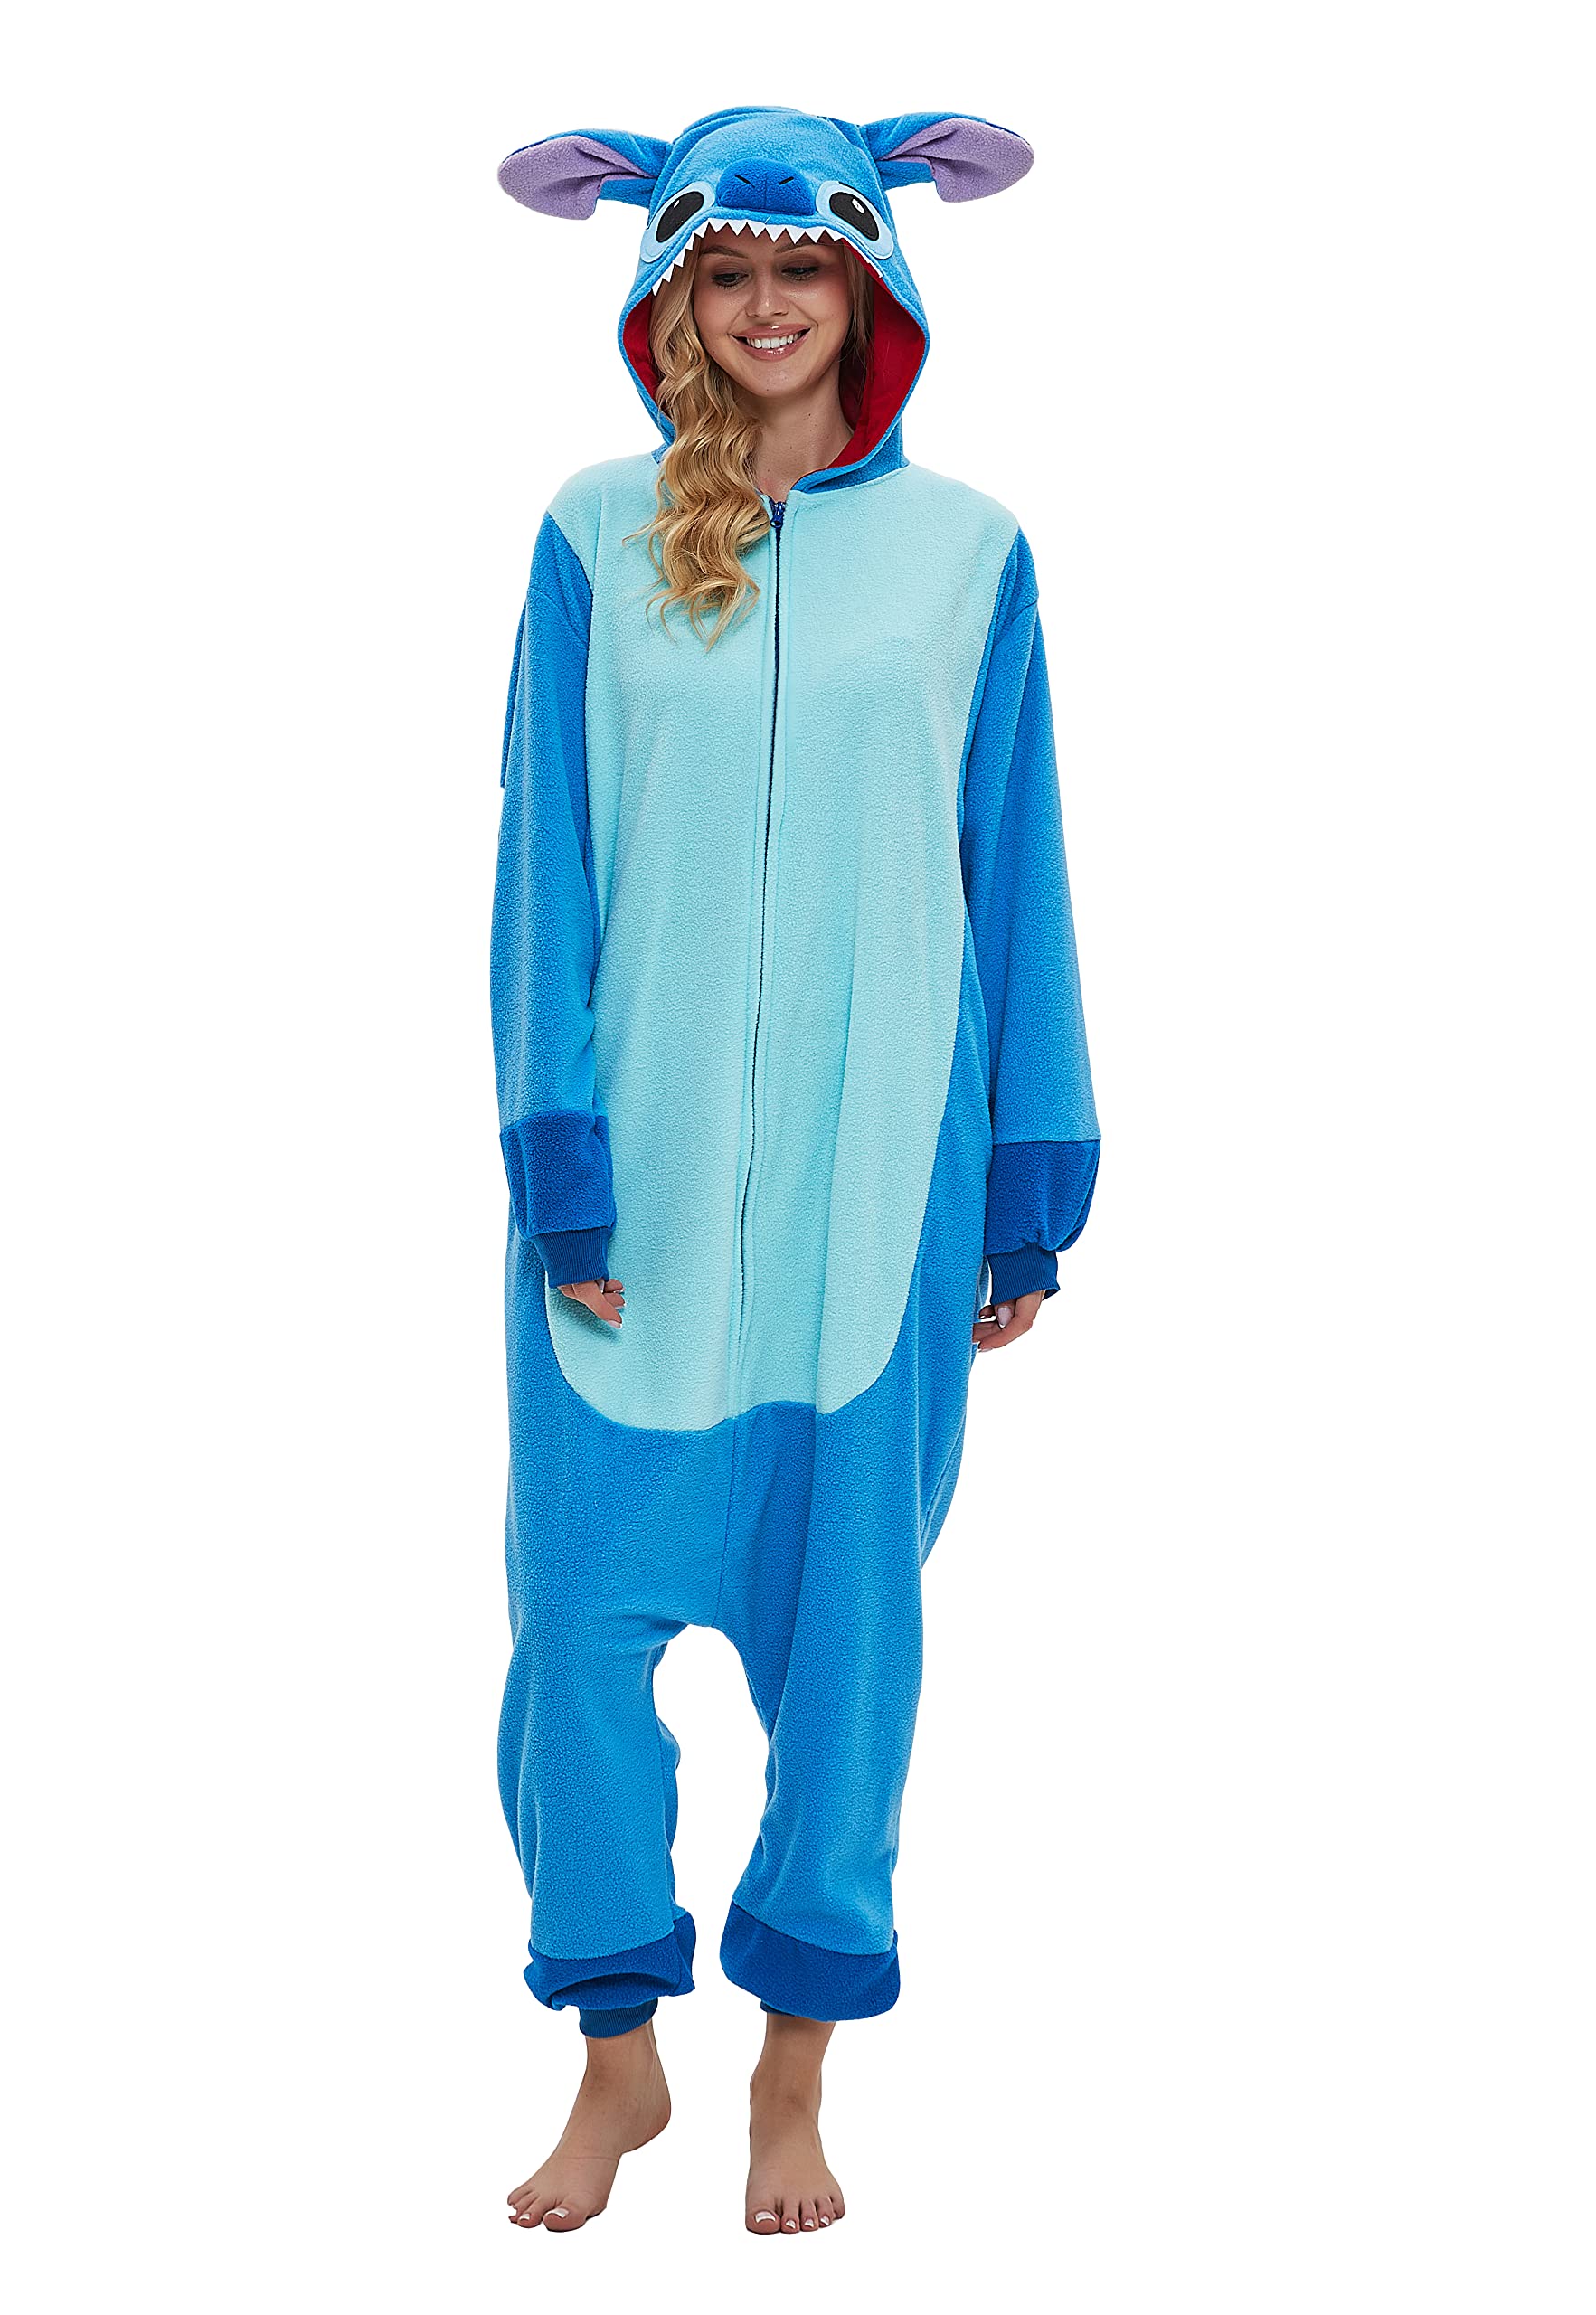 SMITHROAD Jumpsuit Tier Karton Fasching Halloween Kostüm Sleepsuit Cosplay Fleece-Overall Pyjama Schlafanzug Erwachsene Unisex Nachtwäsche Krümelmonster Onesie S